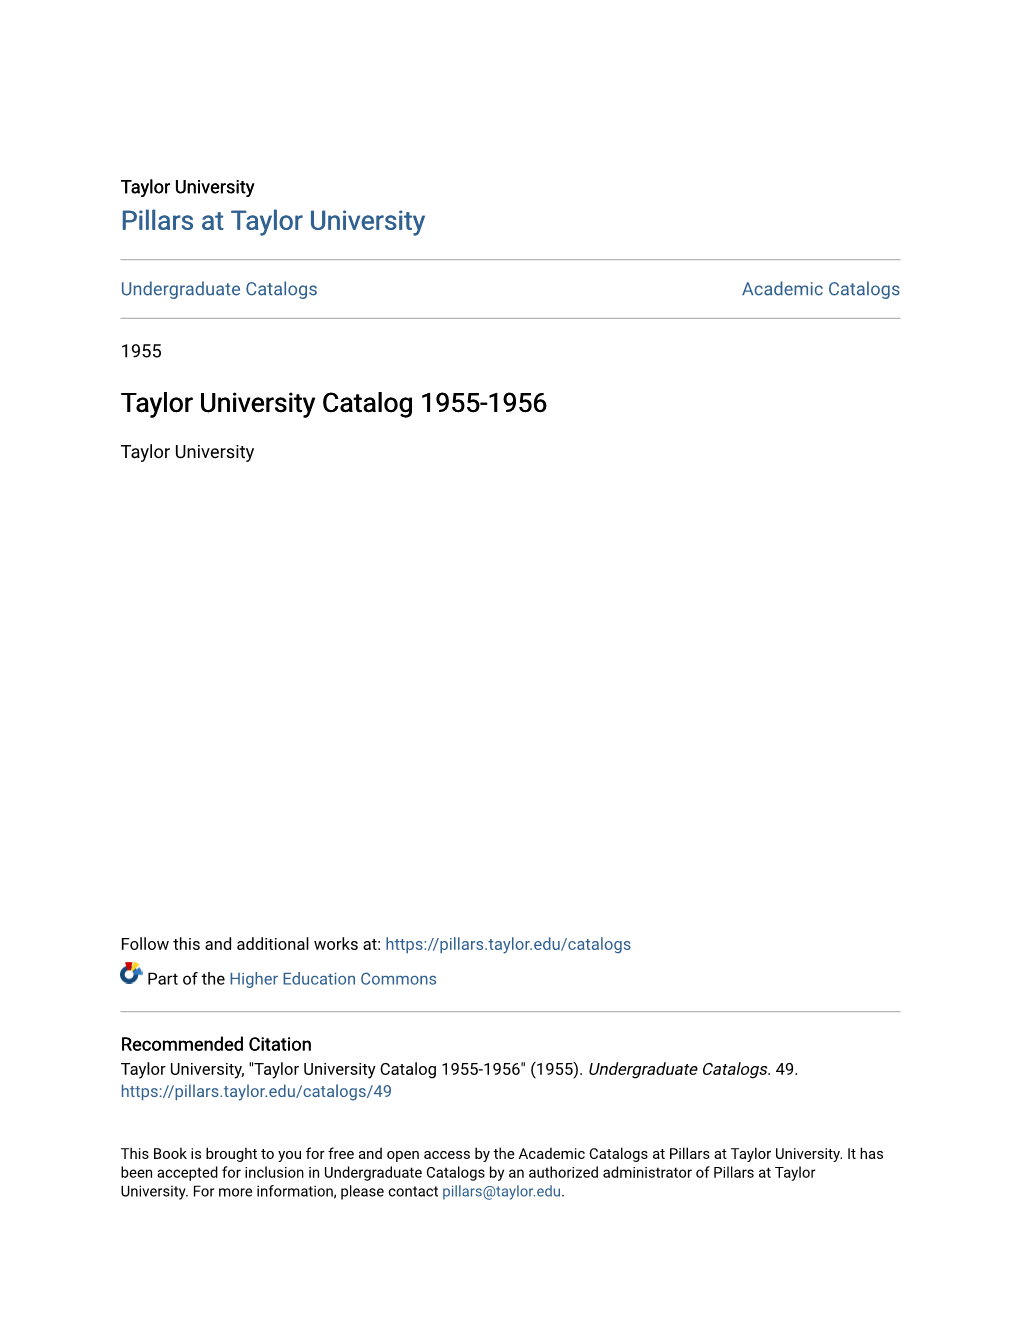 Taylor University Catalog 1955-1956